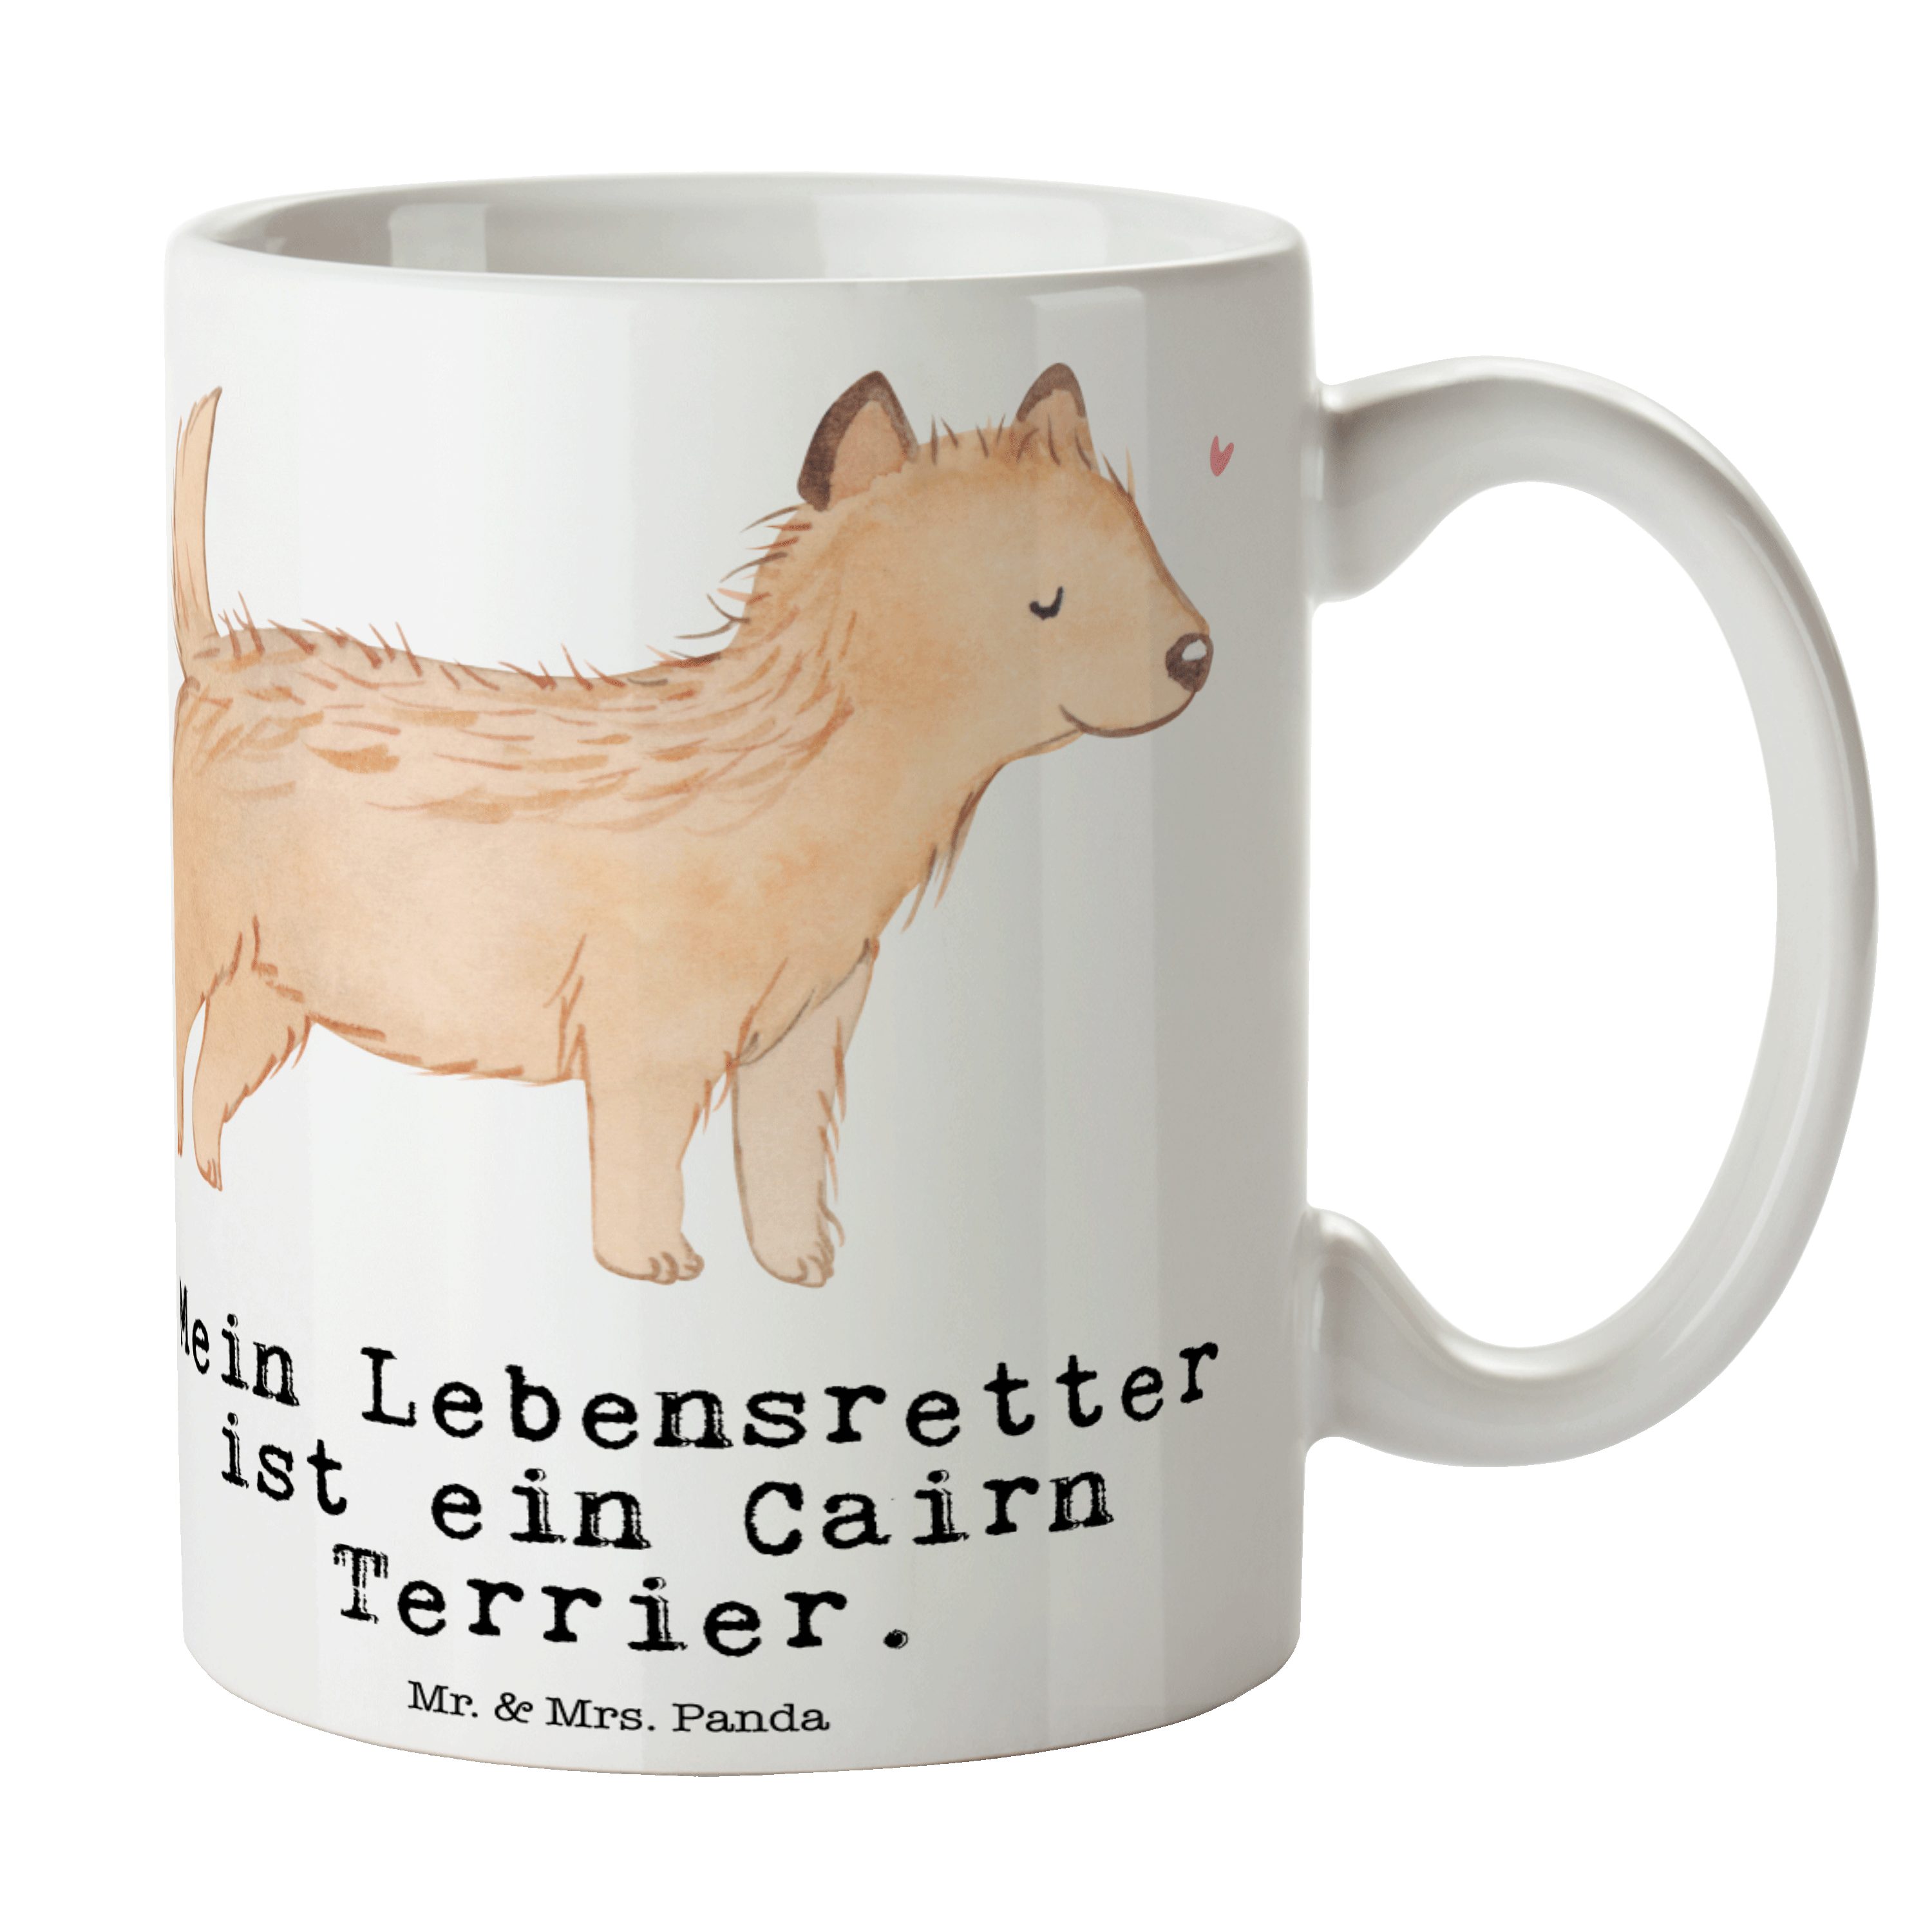 Mr. & Mrs. Panda Tasse Cairn Terrier Lebensretter - Weiß - Geschenk, Keramiktasse, Kaffeebec, Keramik